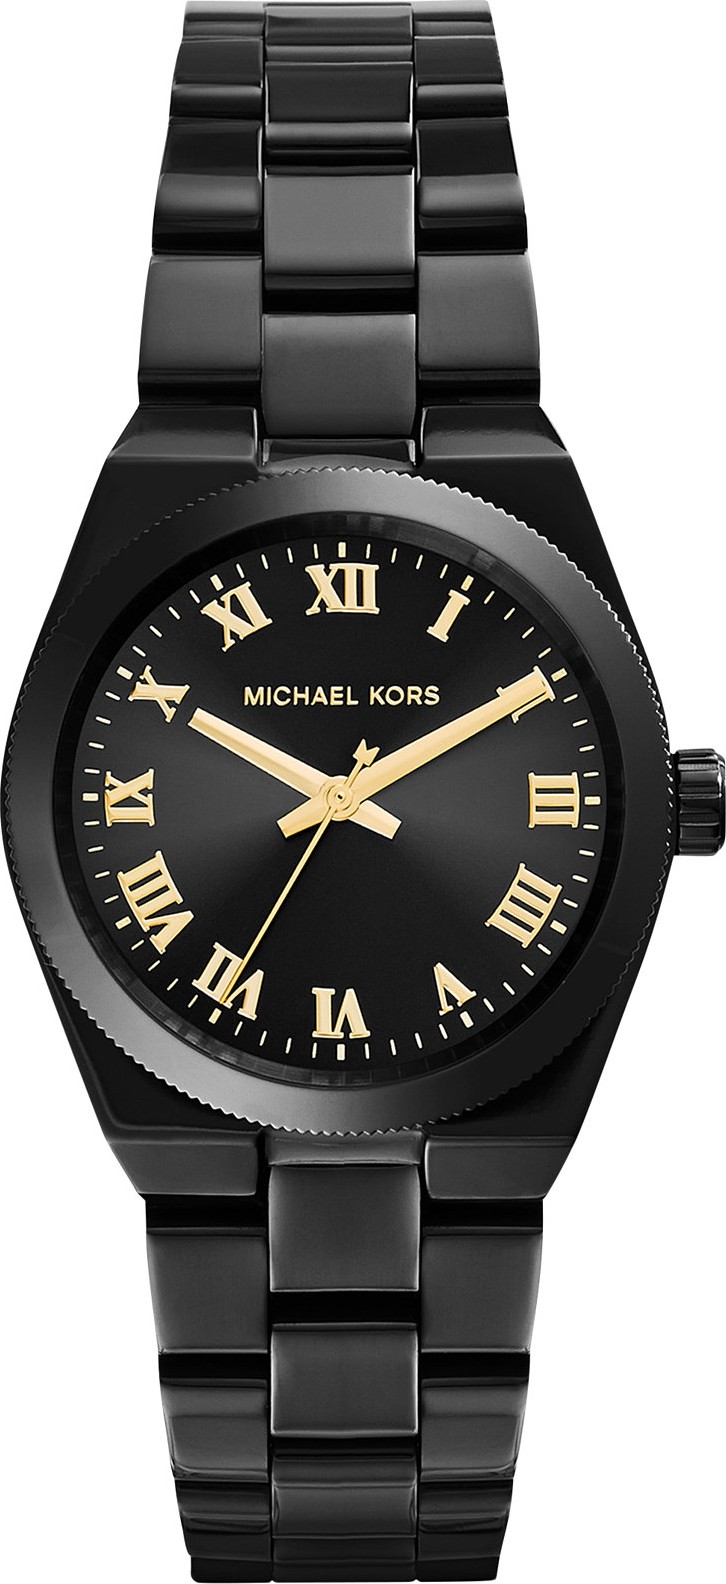 Michael Kors MK6058 Bradshaw Black Watch 36mm